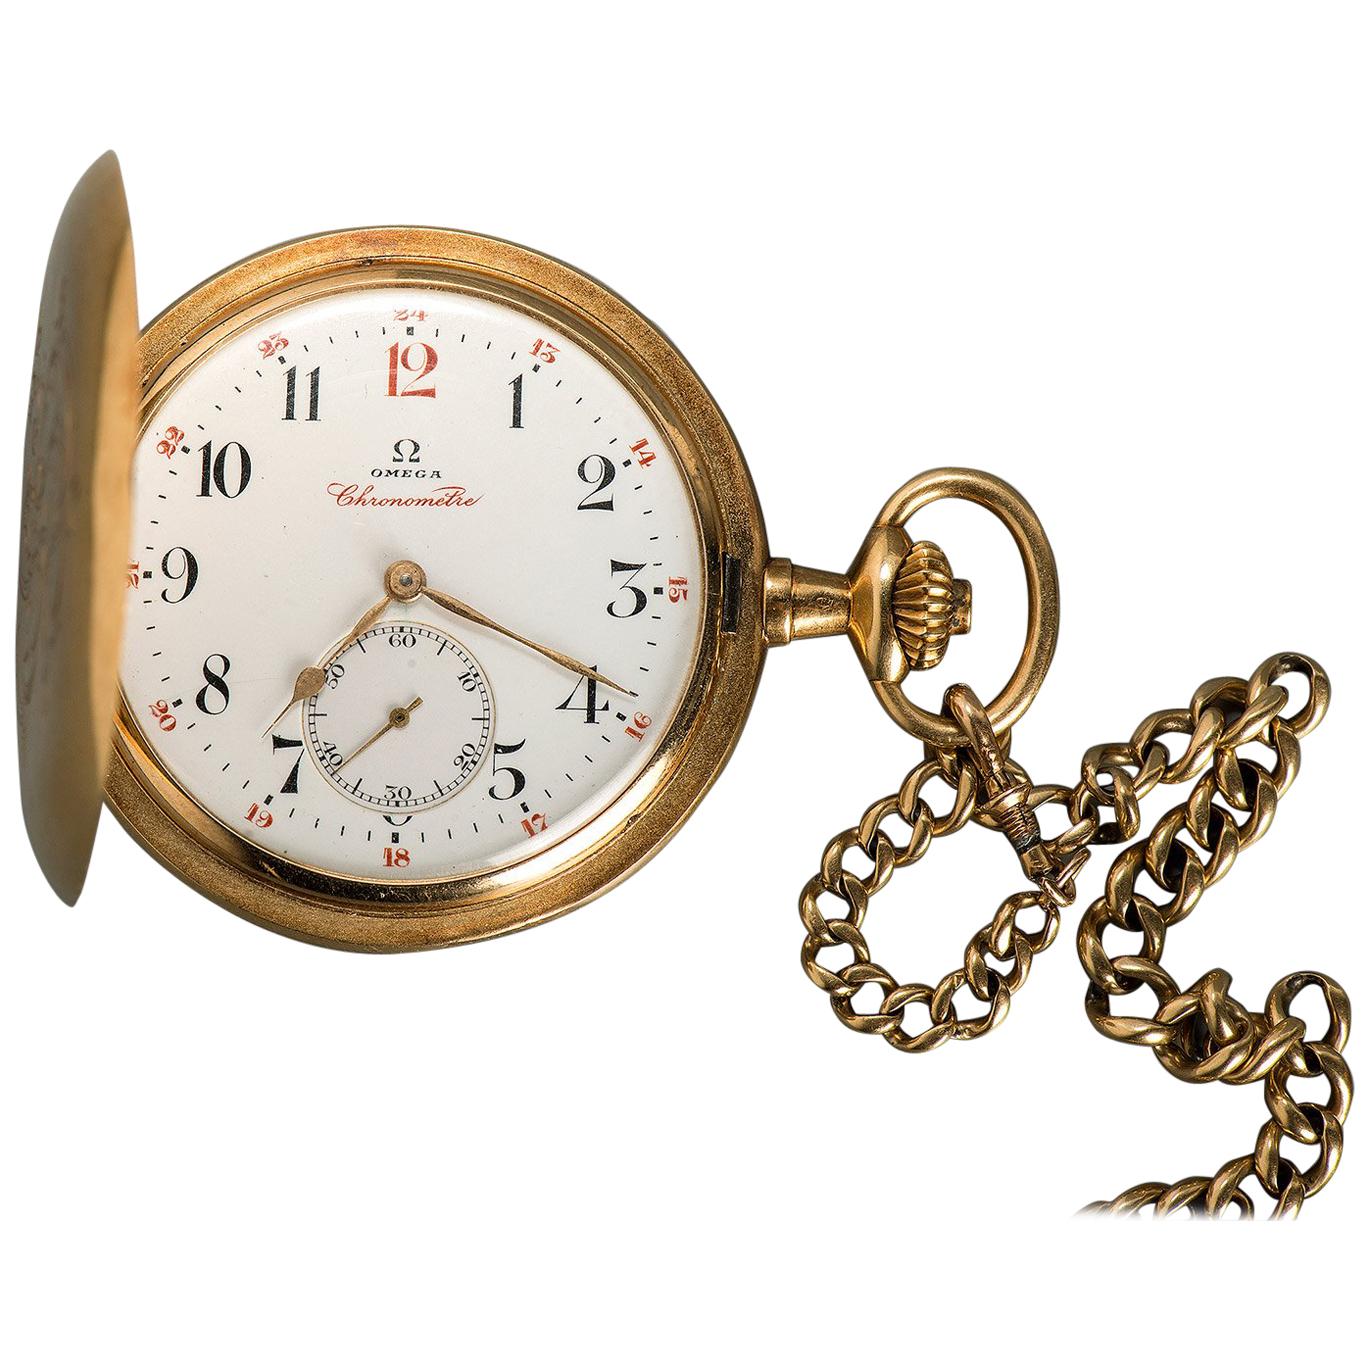 Gold Omega Chronometre, Swiss Pocket Watch For Sale